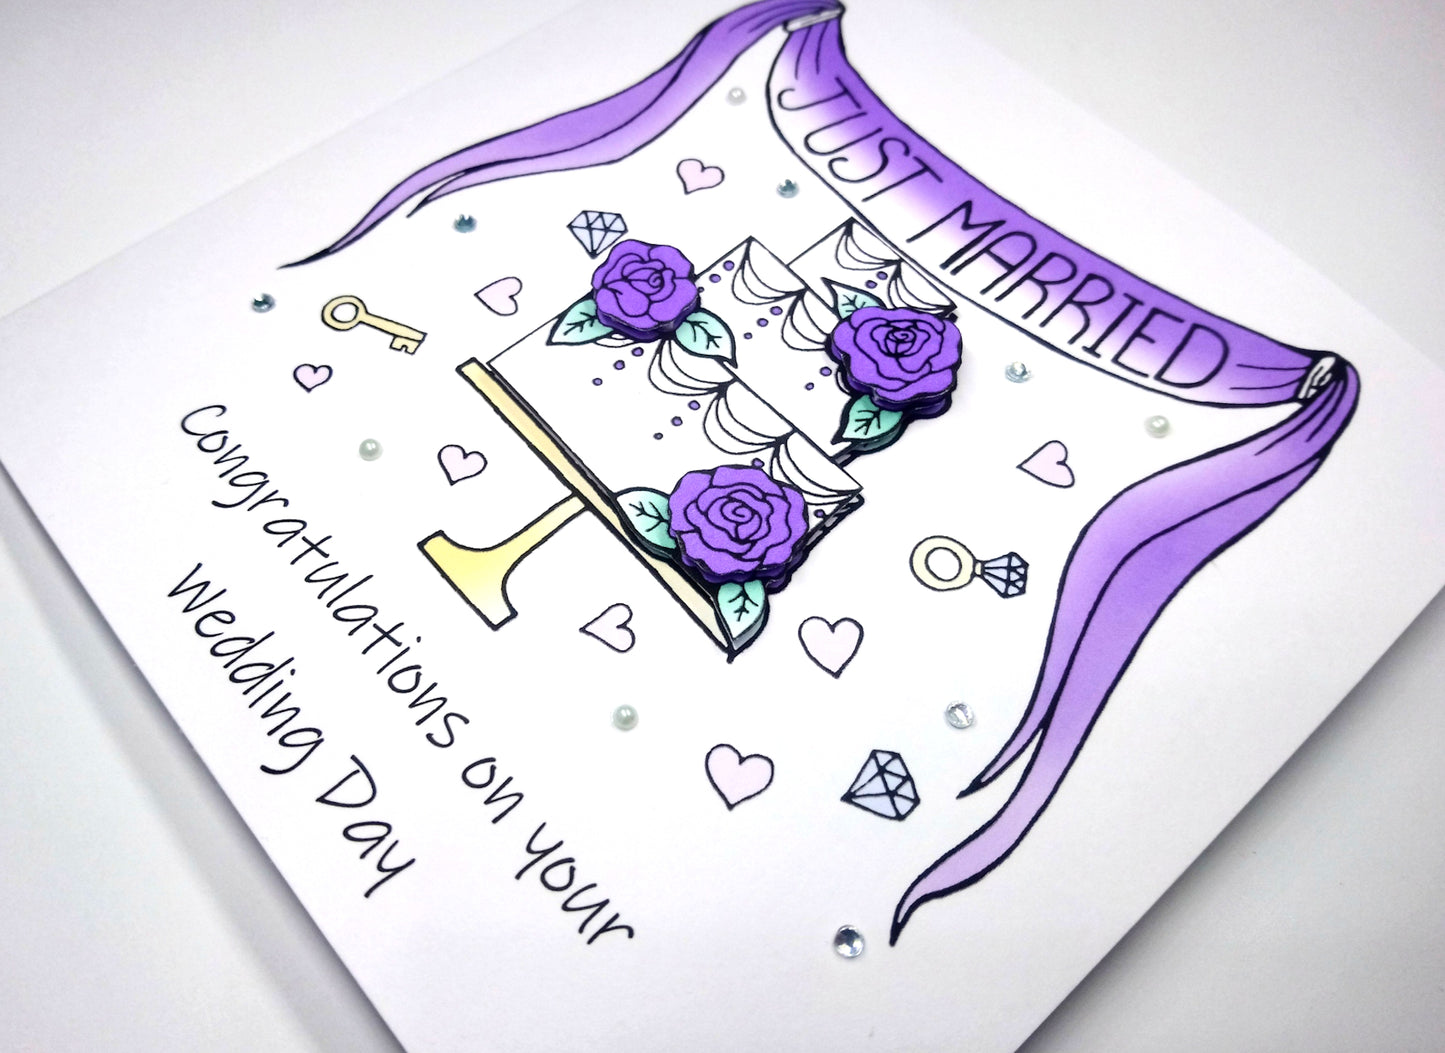 Congratulations on your Wedding Card - Purple cake